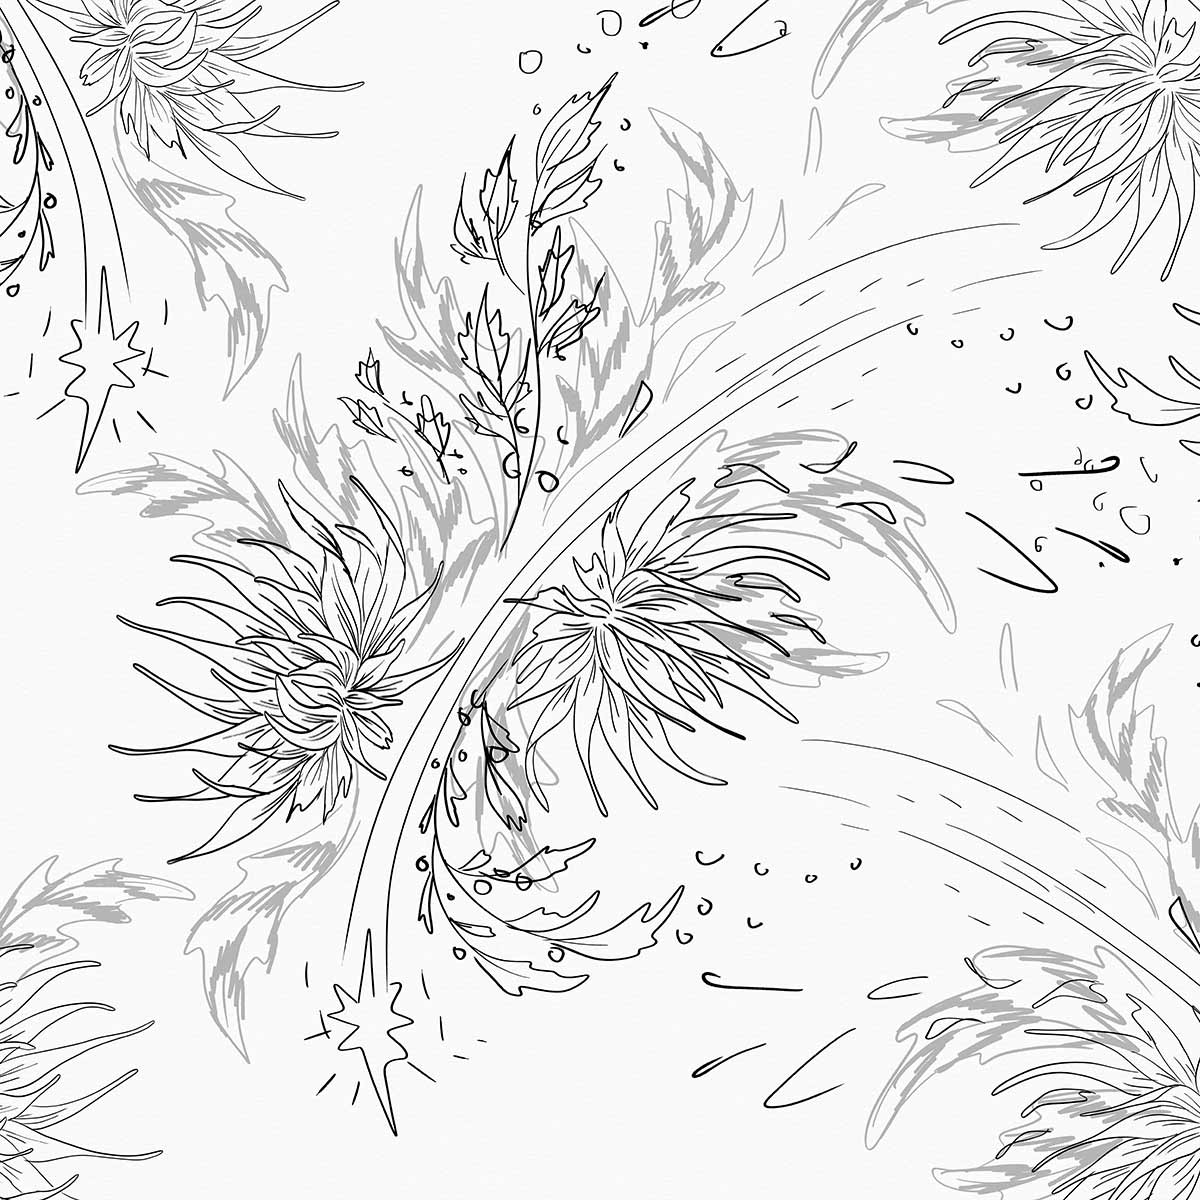 Floral supernova concept sketch by Andrea Muller